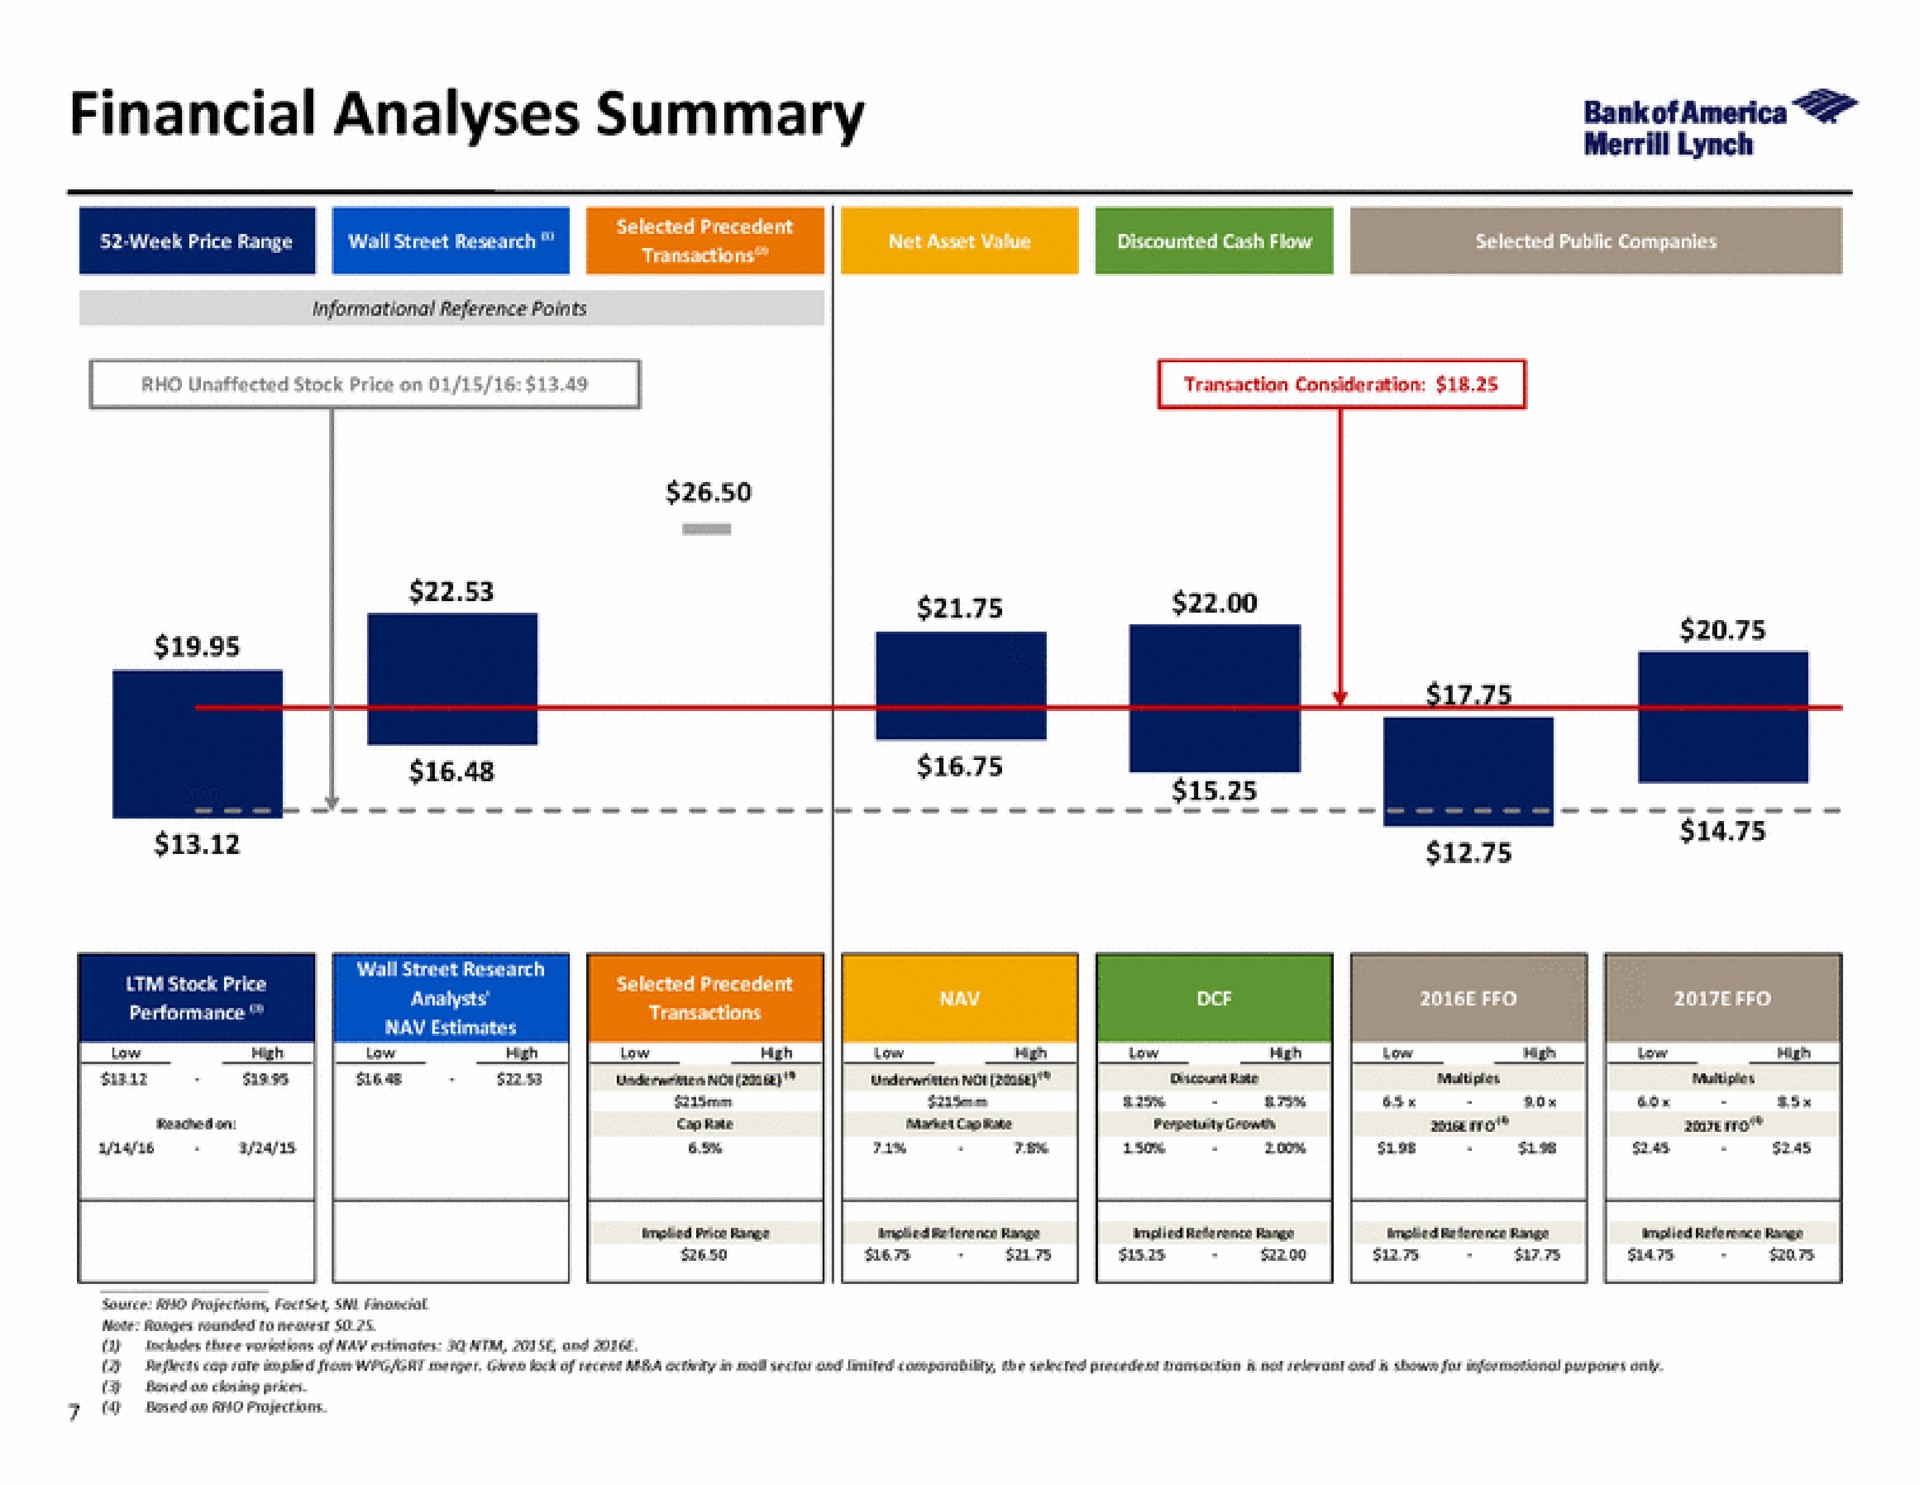 financial analyses summary | Bank of America